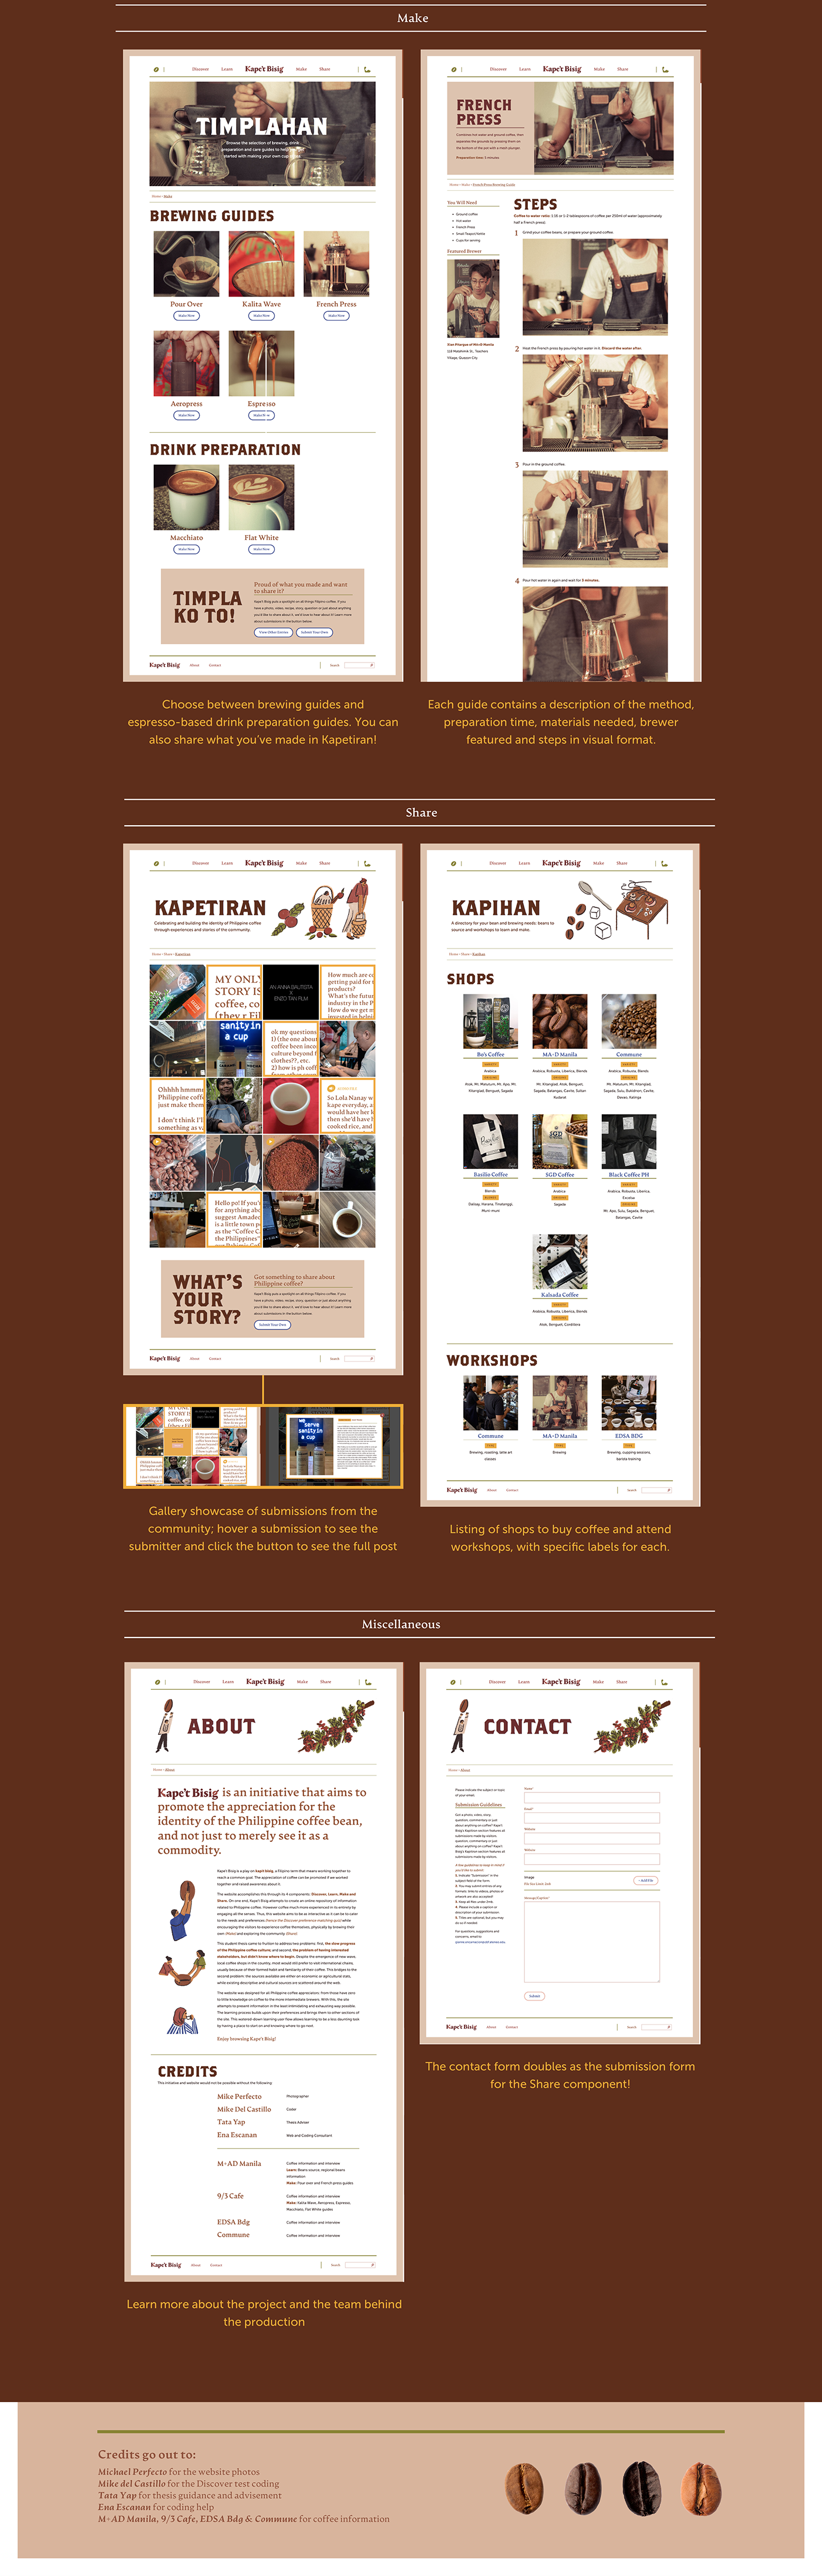 Coffee Philippine Coffee filipino philippines ILLUSTRATION  Web Design  branding  design research